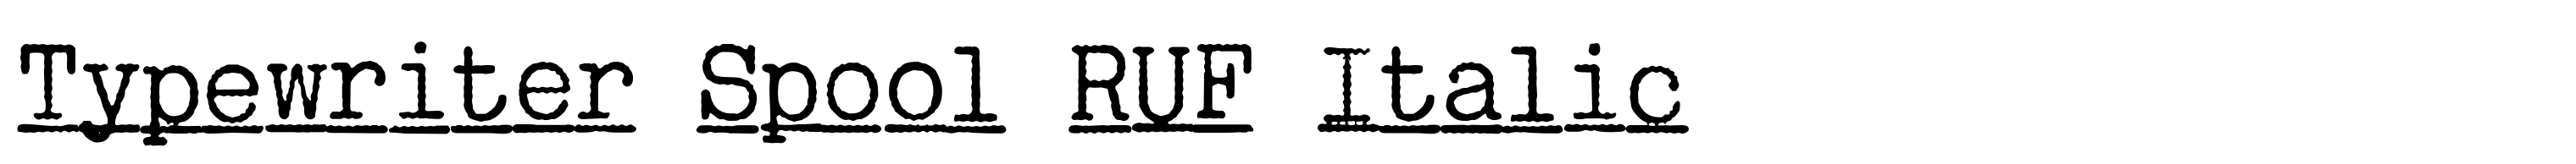 Typewriter Spool RUF Italic